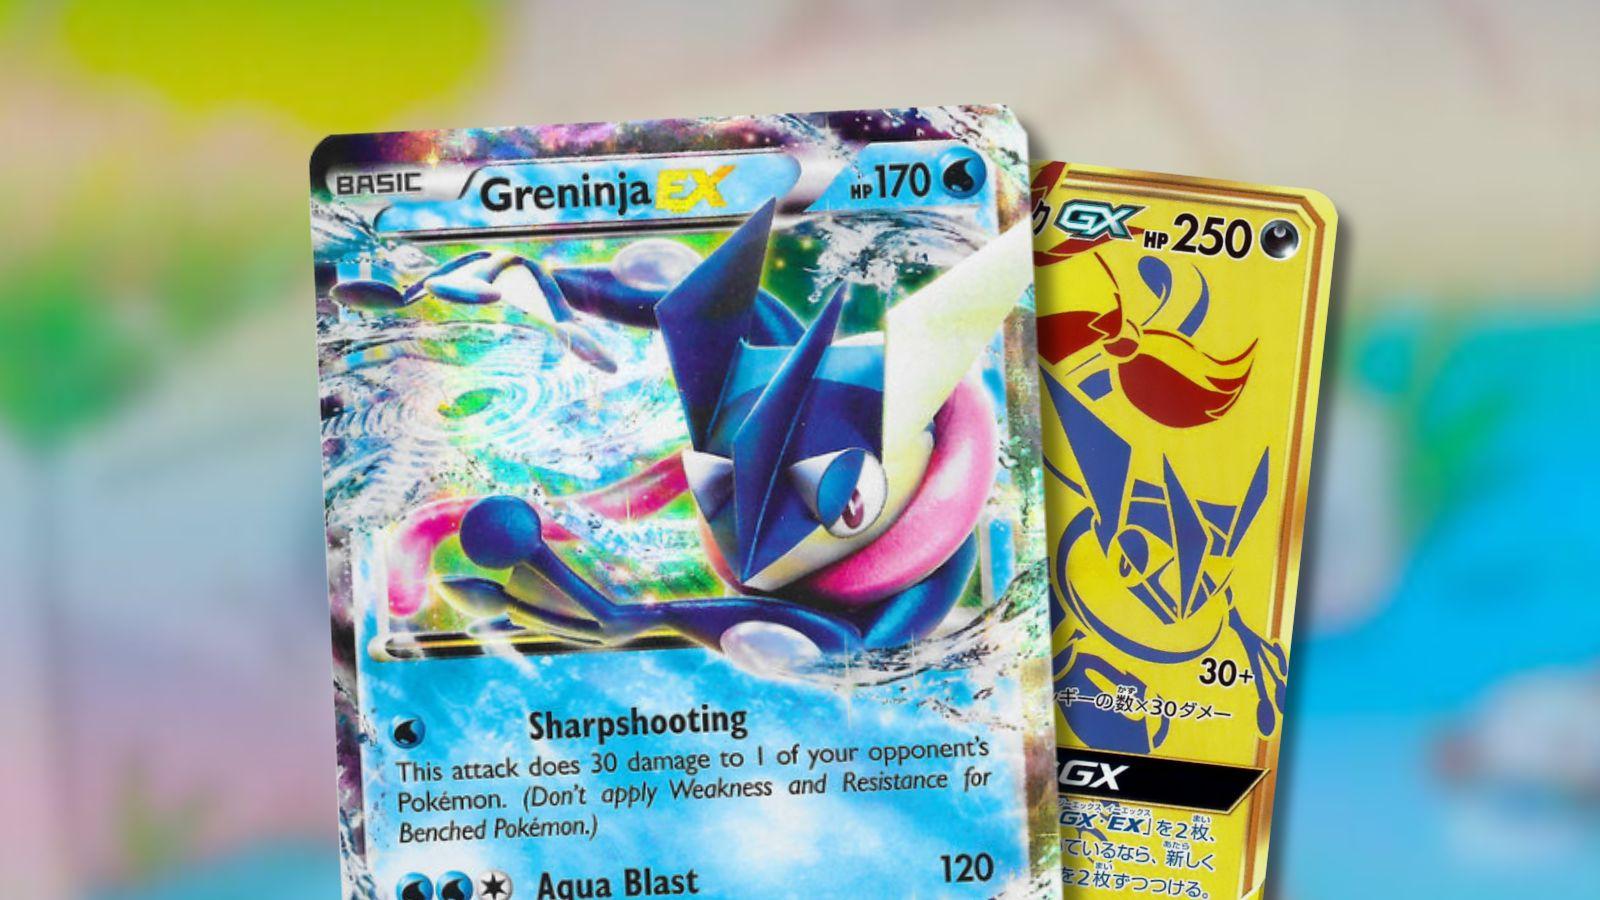 Ash Greninja and Greninja and Zoroark Pokemon card with riverside background.